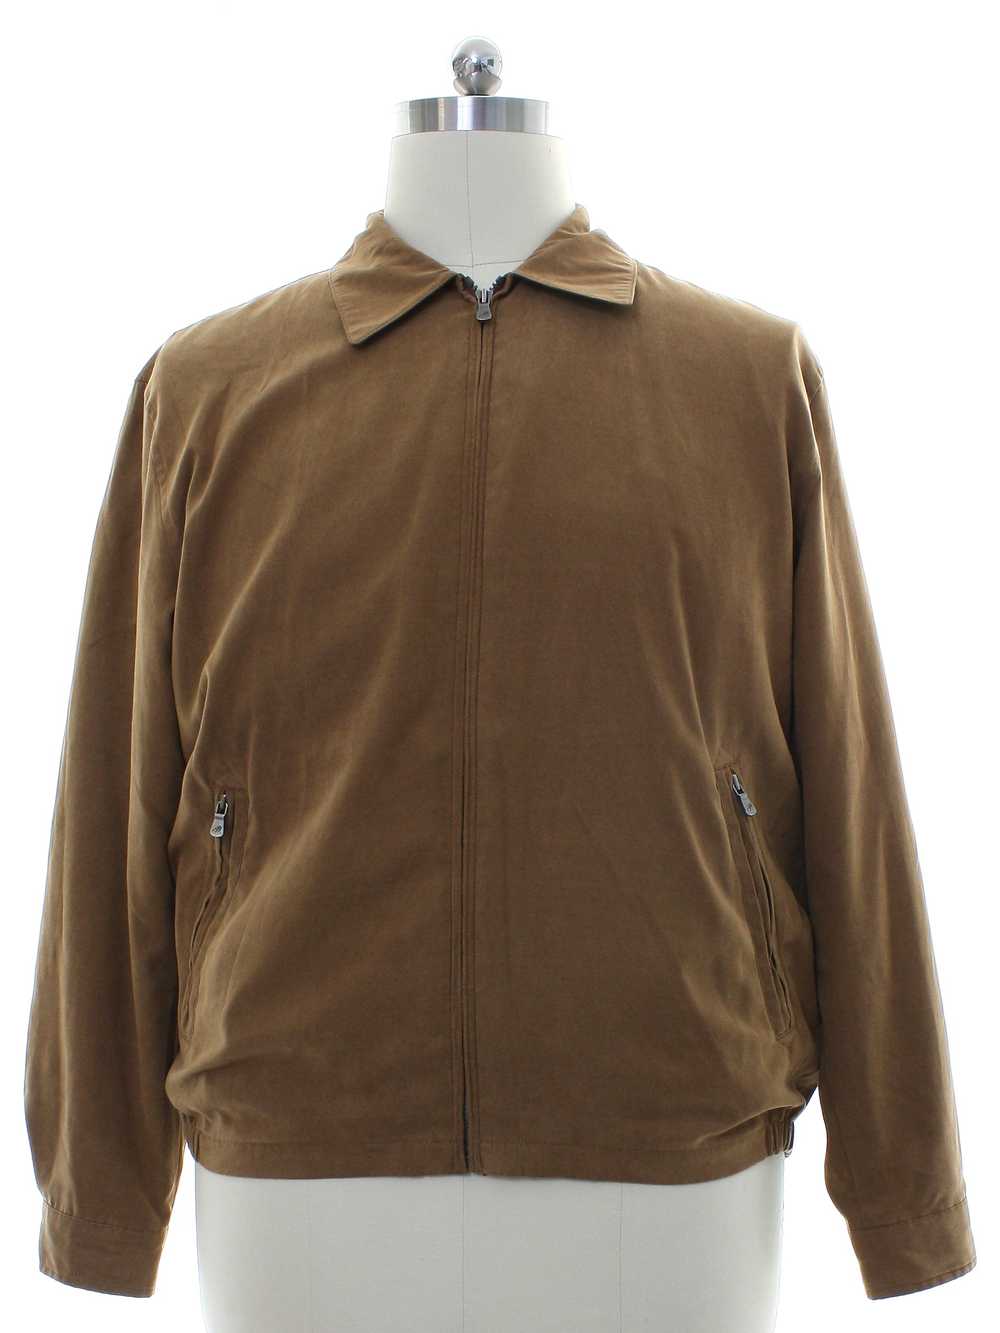 1980's Mens Golf Style Zip Jacket - image 1